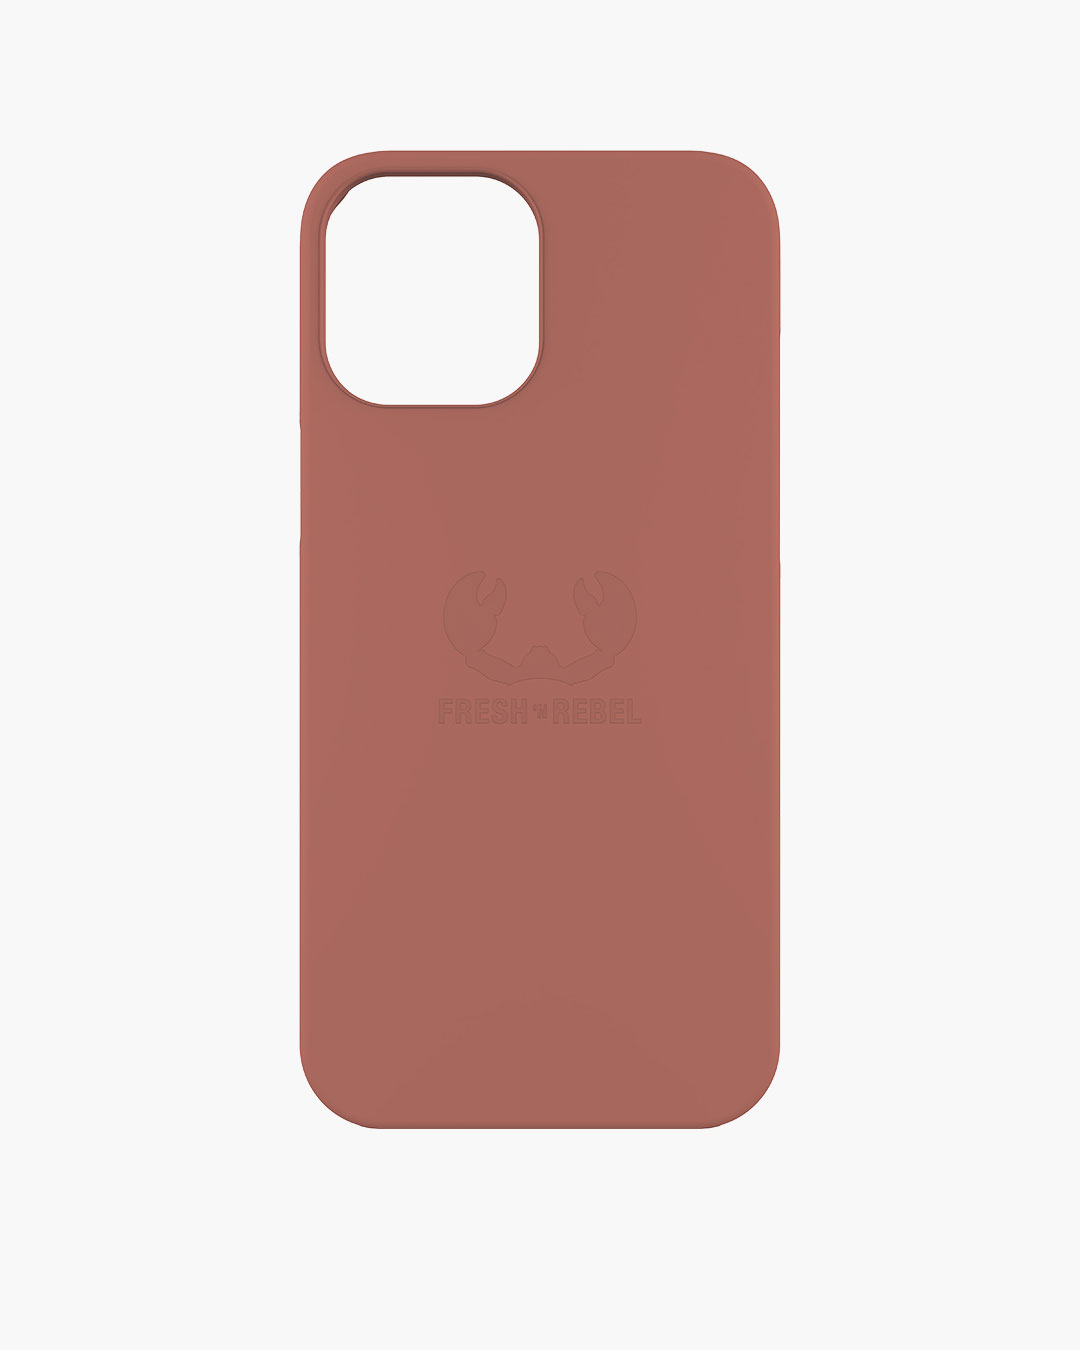 Fresh 'n Rebel - Phone Case iPhone 12 Pro Max - Safari Red